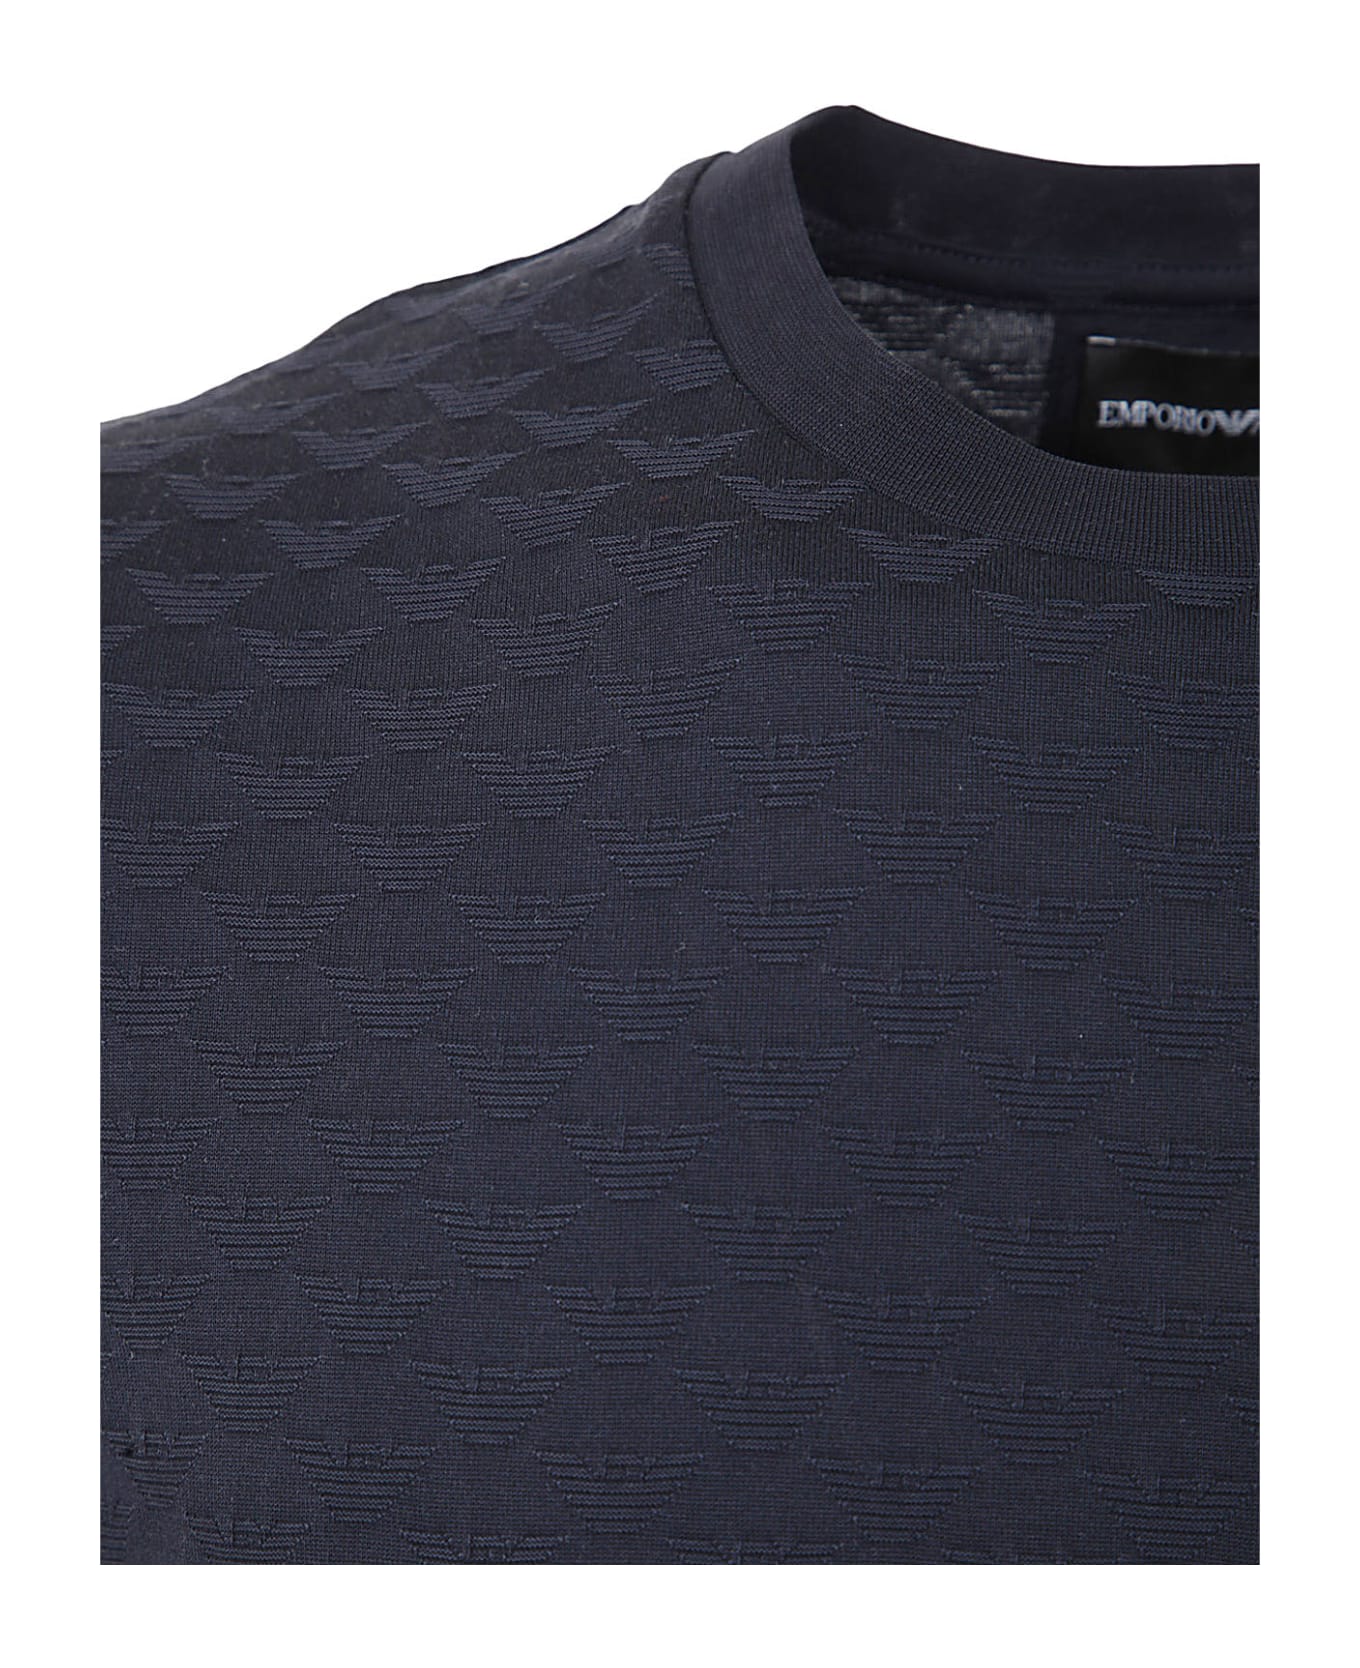 Emporio Armani Crew Neck Short Sleeves T-shirt - Navy Blue シャツ